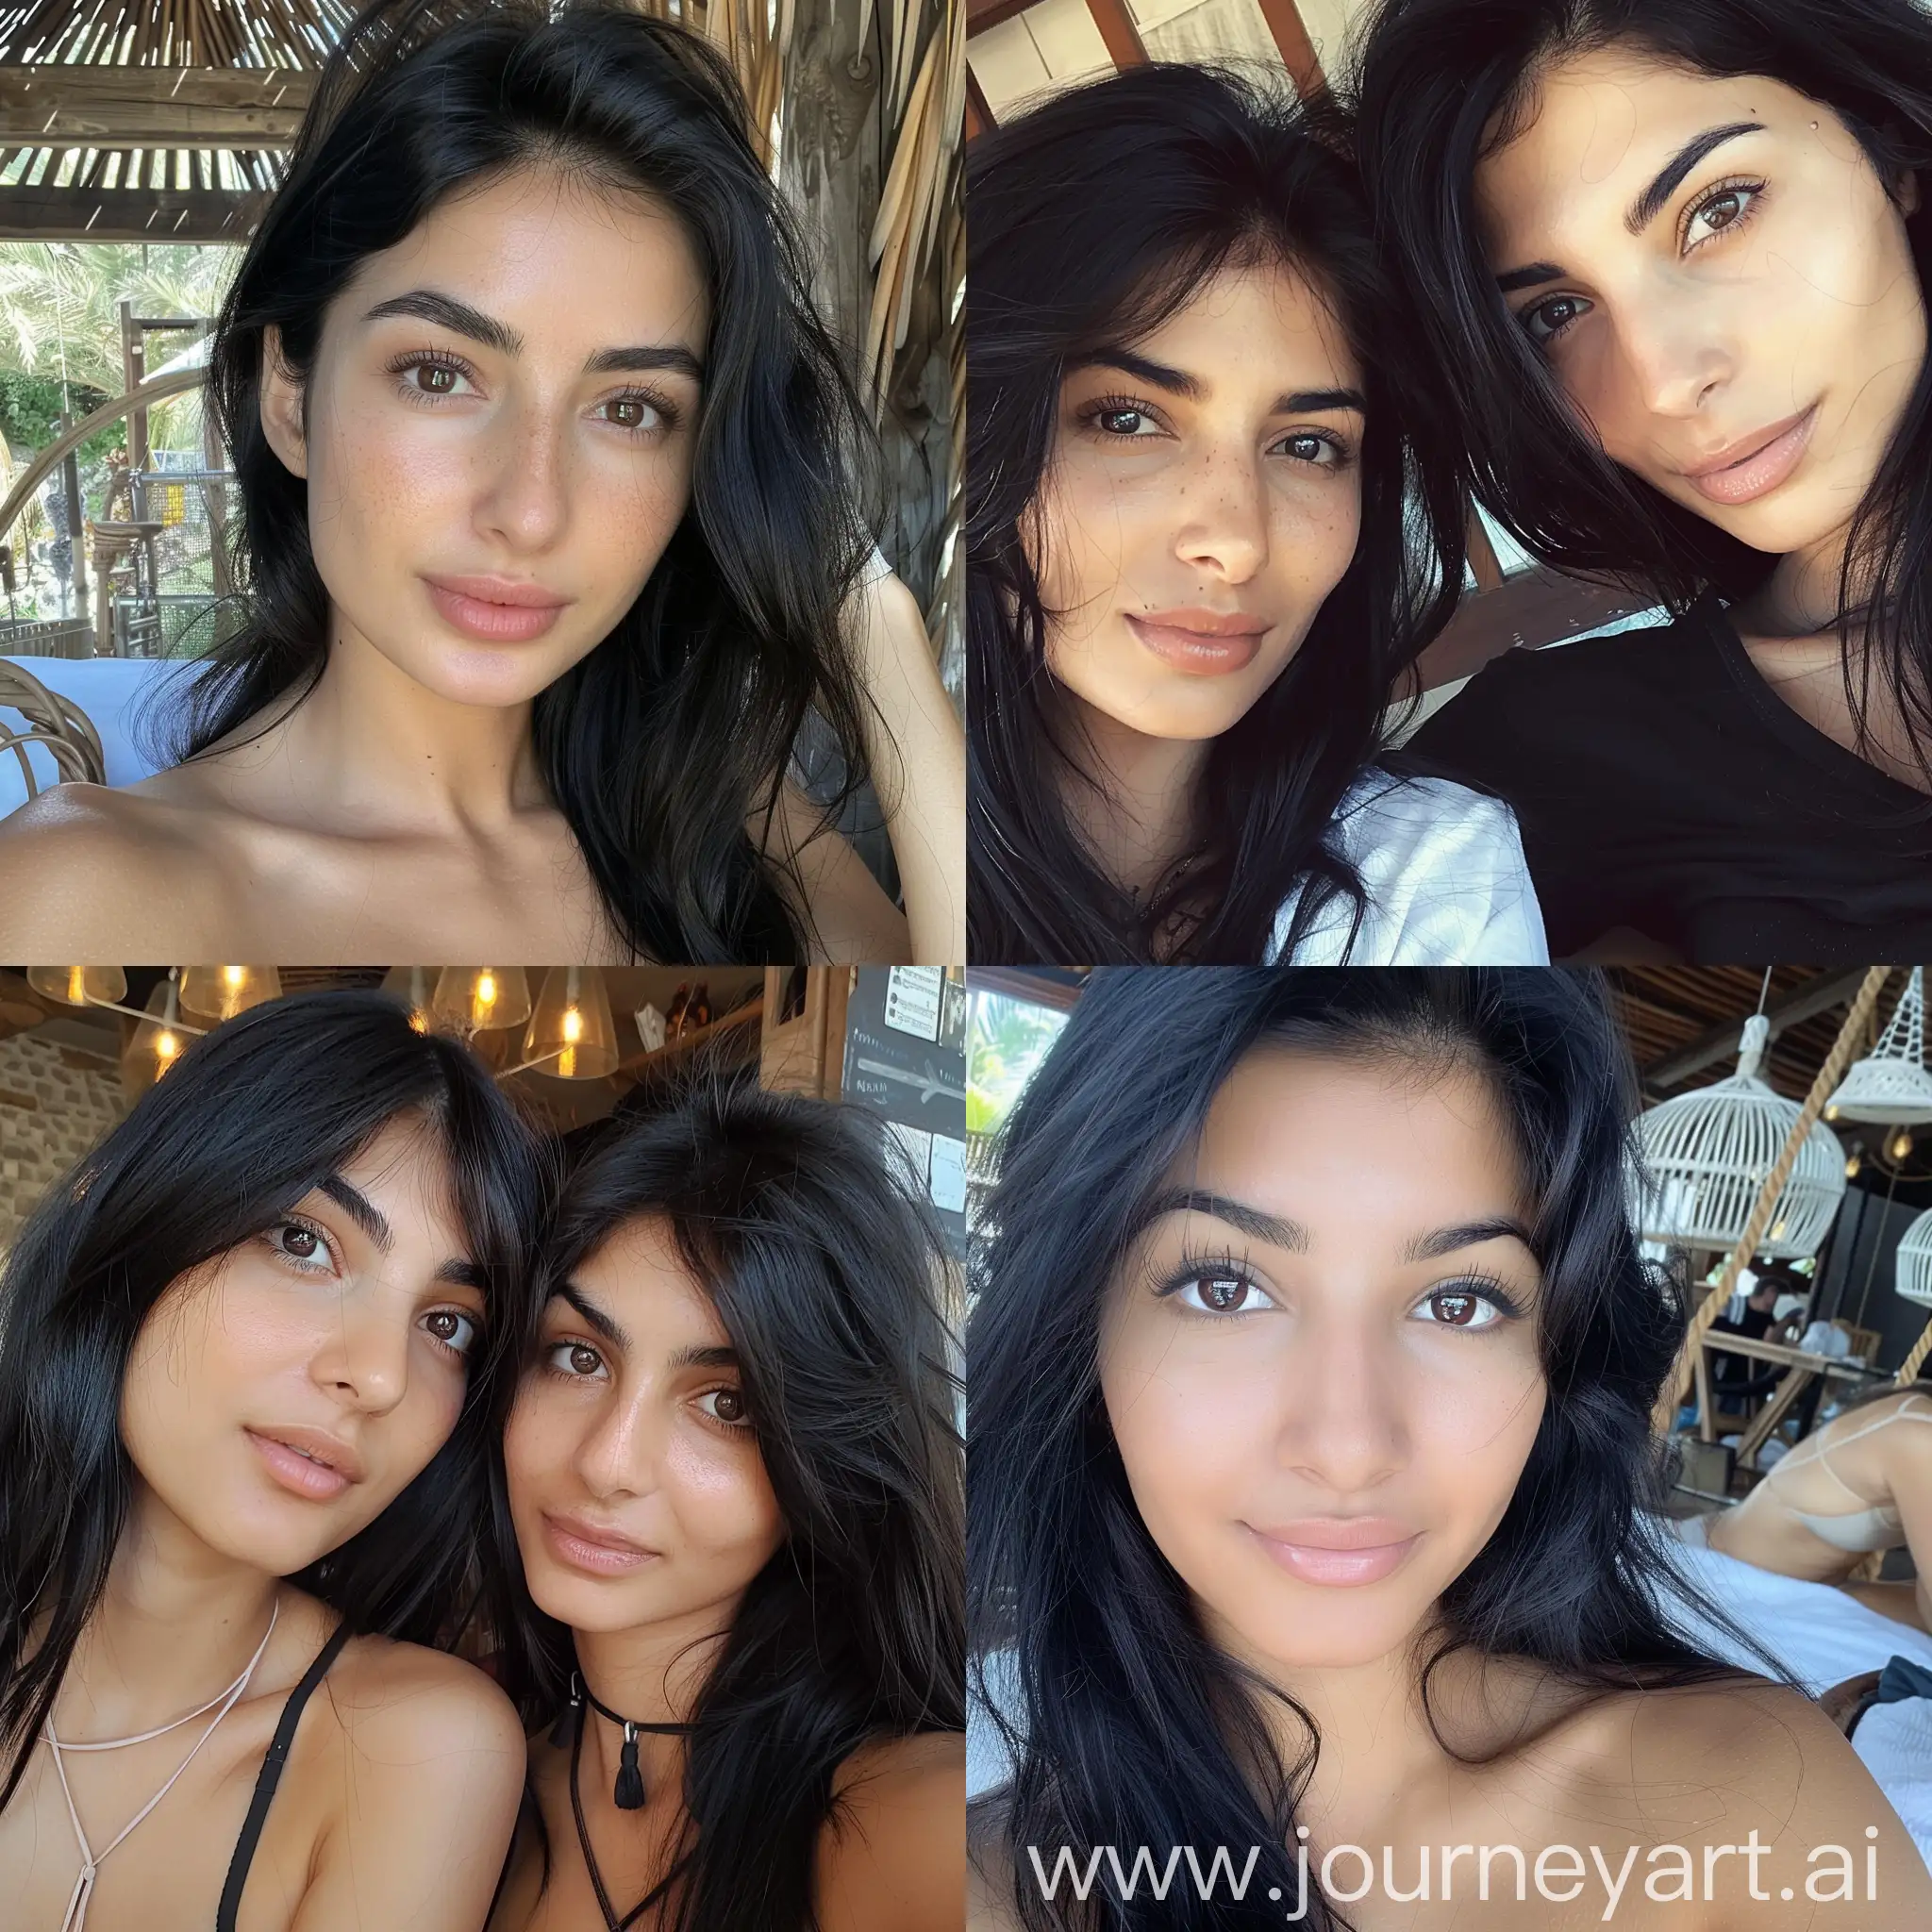 Armenian-Girls-with-Black-Hair-Enjoying-Massage